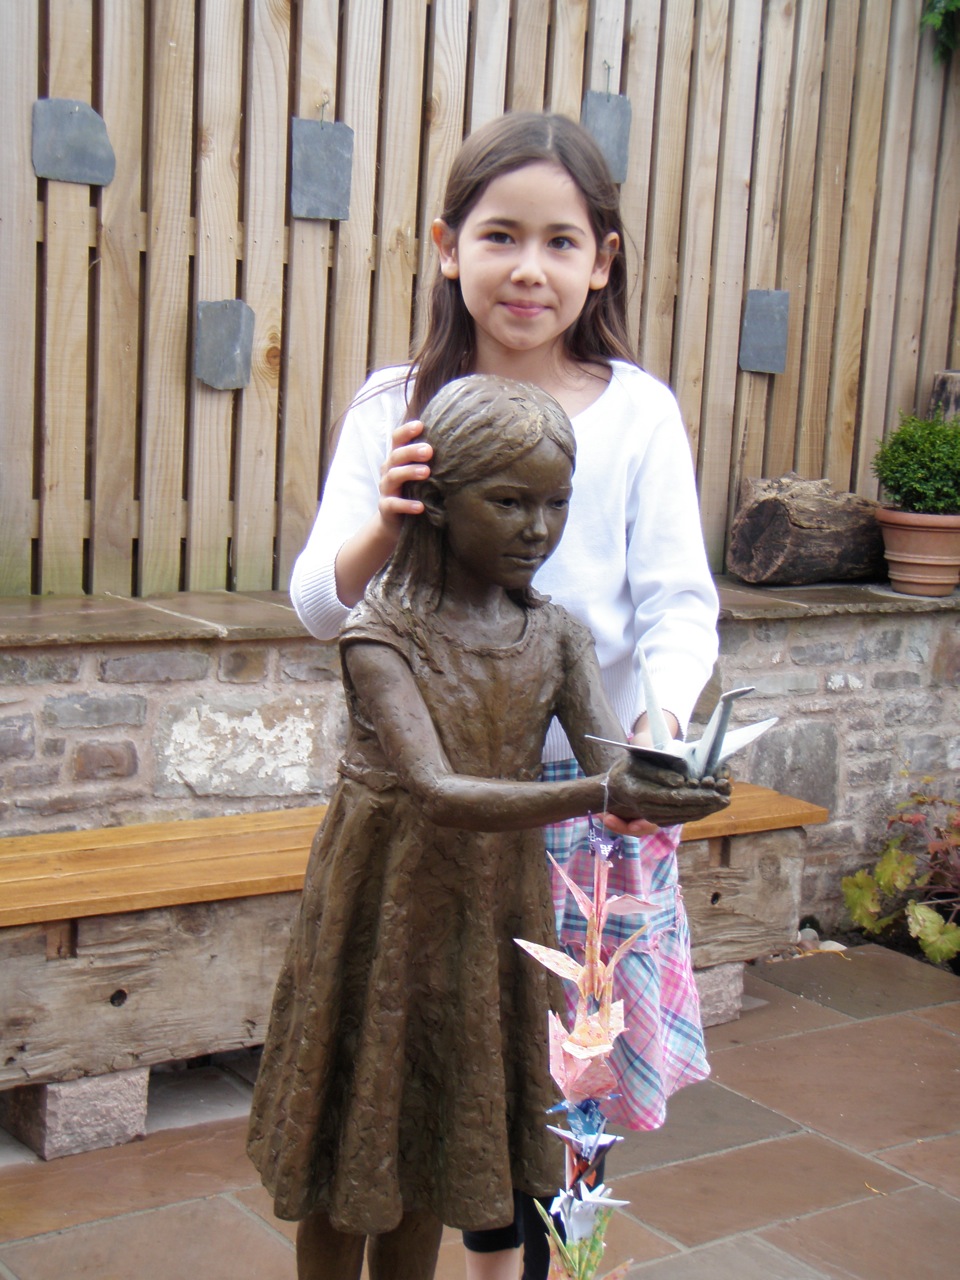 Emily with the bronze Sadako